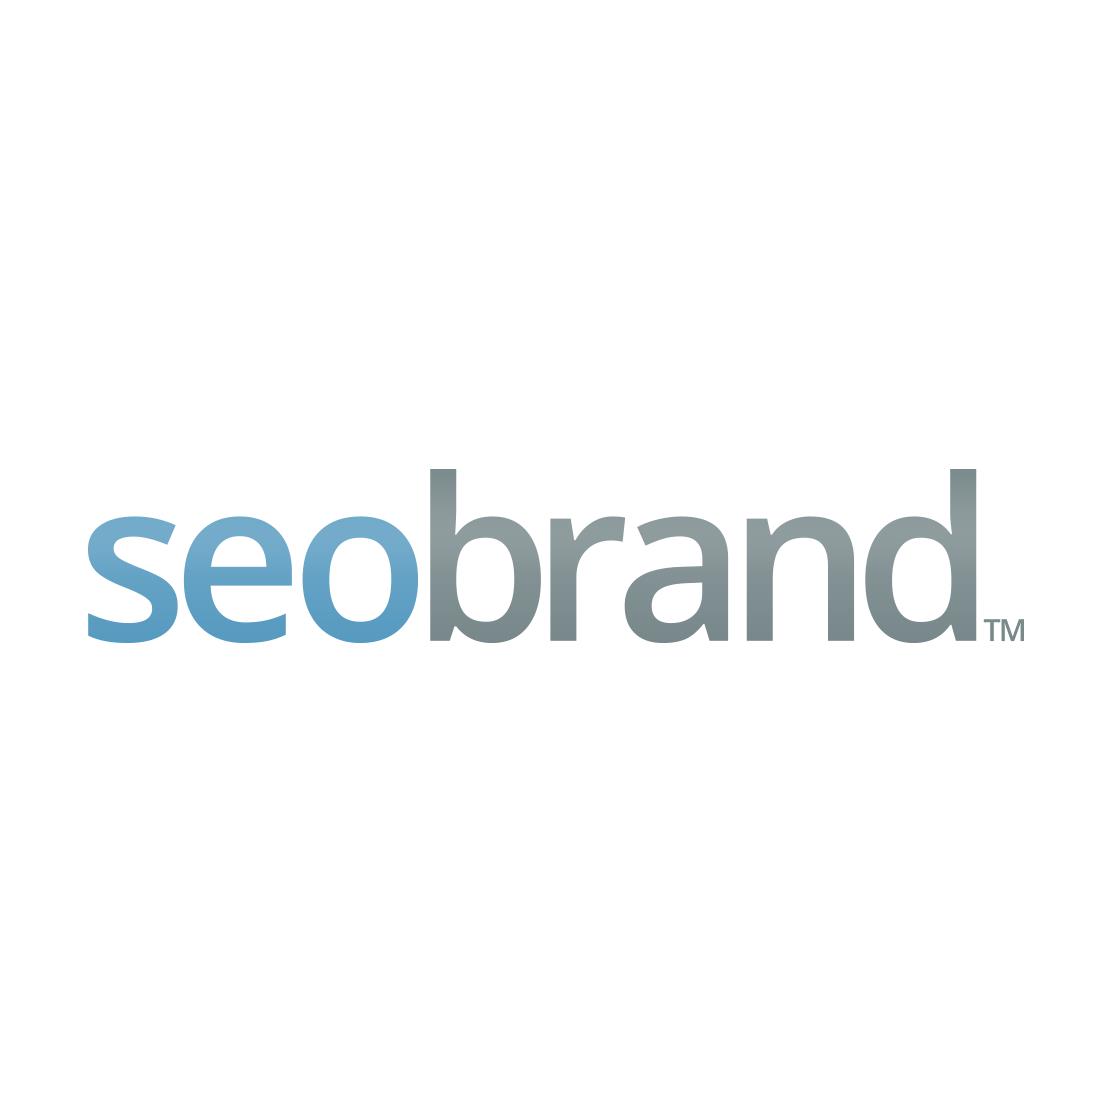 Best Search Engine Optimization Agency Logo: SEO Brand